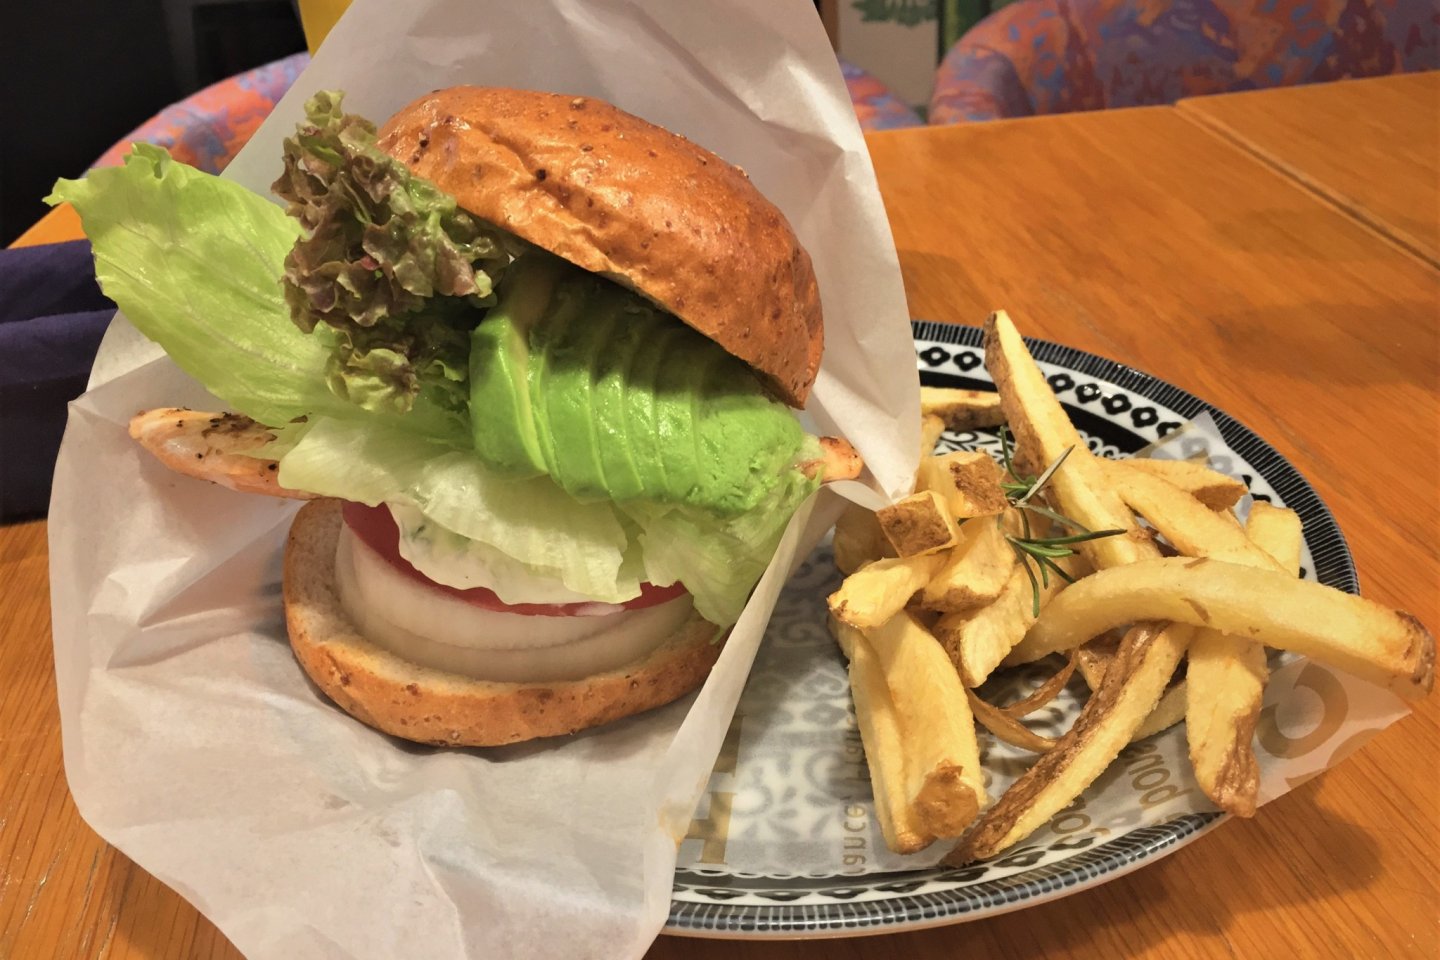 Salmon, avocado, tomato, onion, lettuce, and a house tartar sauce. The perfect salmon burger. No contest.